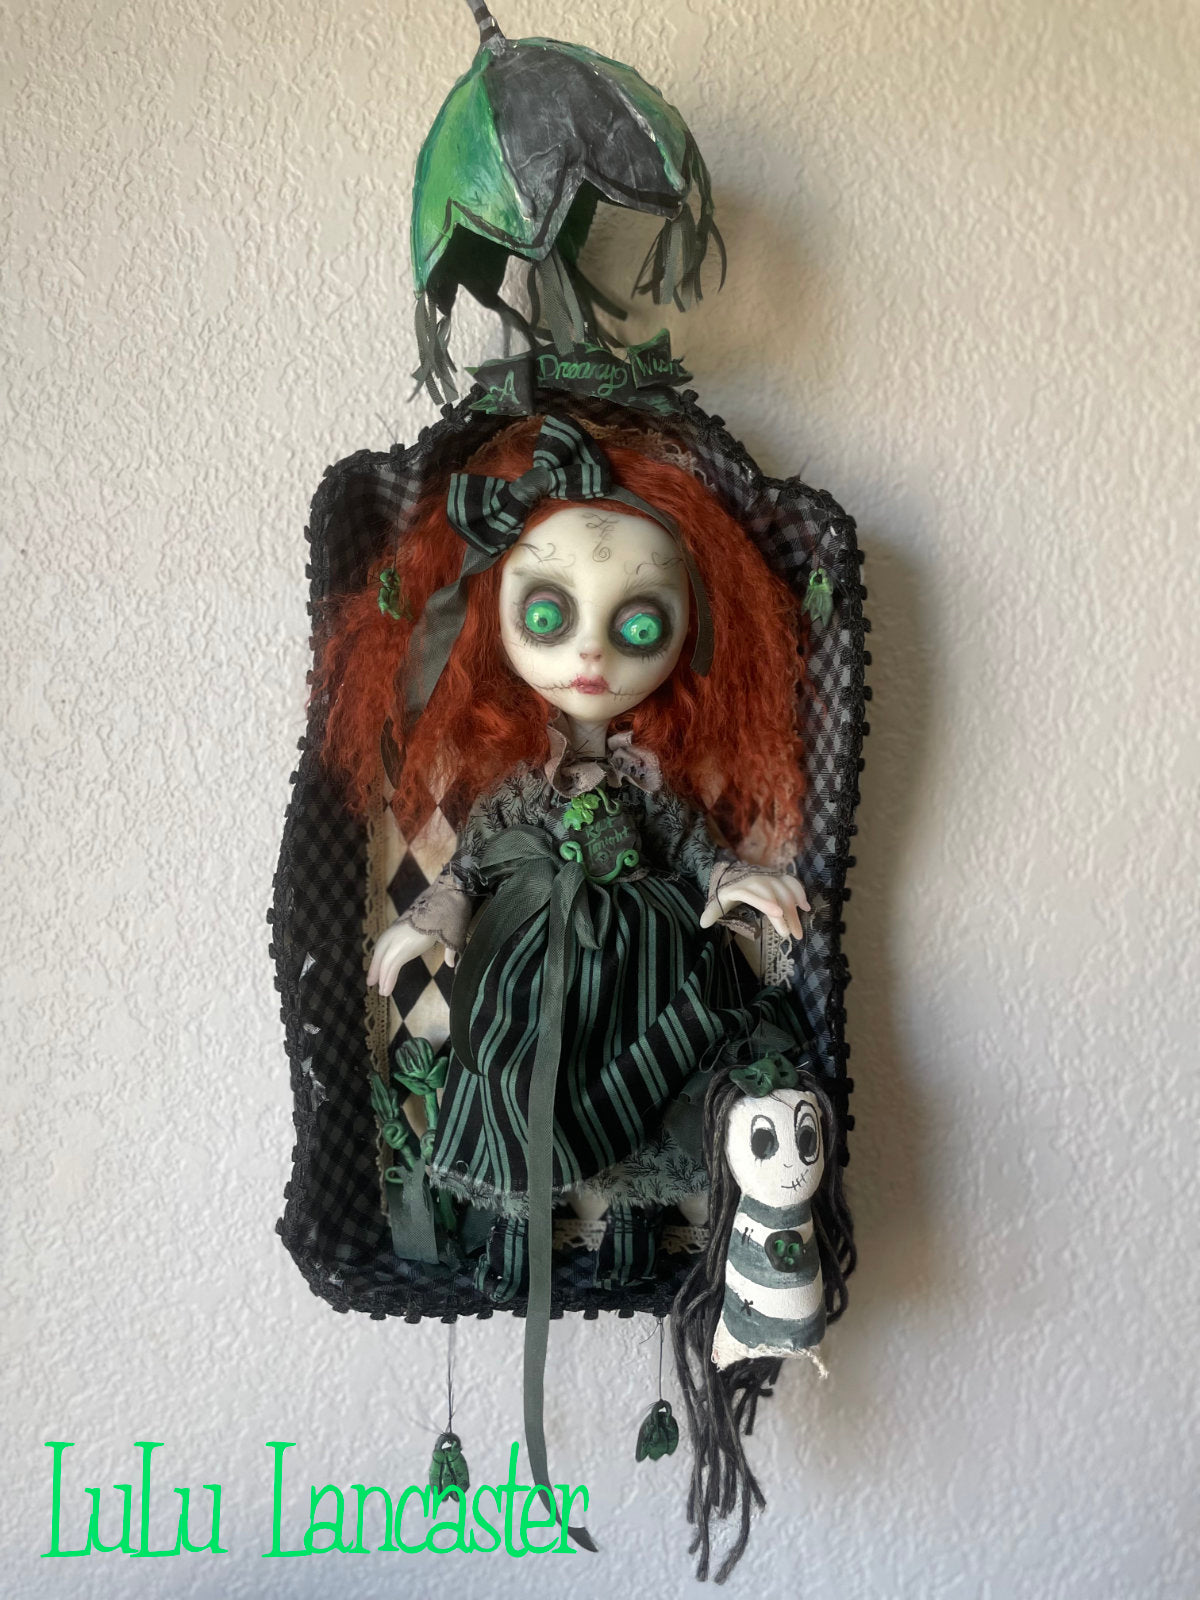 A Dreary Wish Boxed gloomy Grady Gravestone Original LuLu Lancaster Art Doll